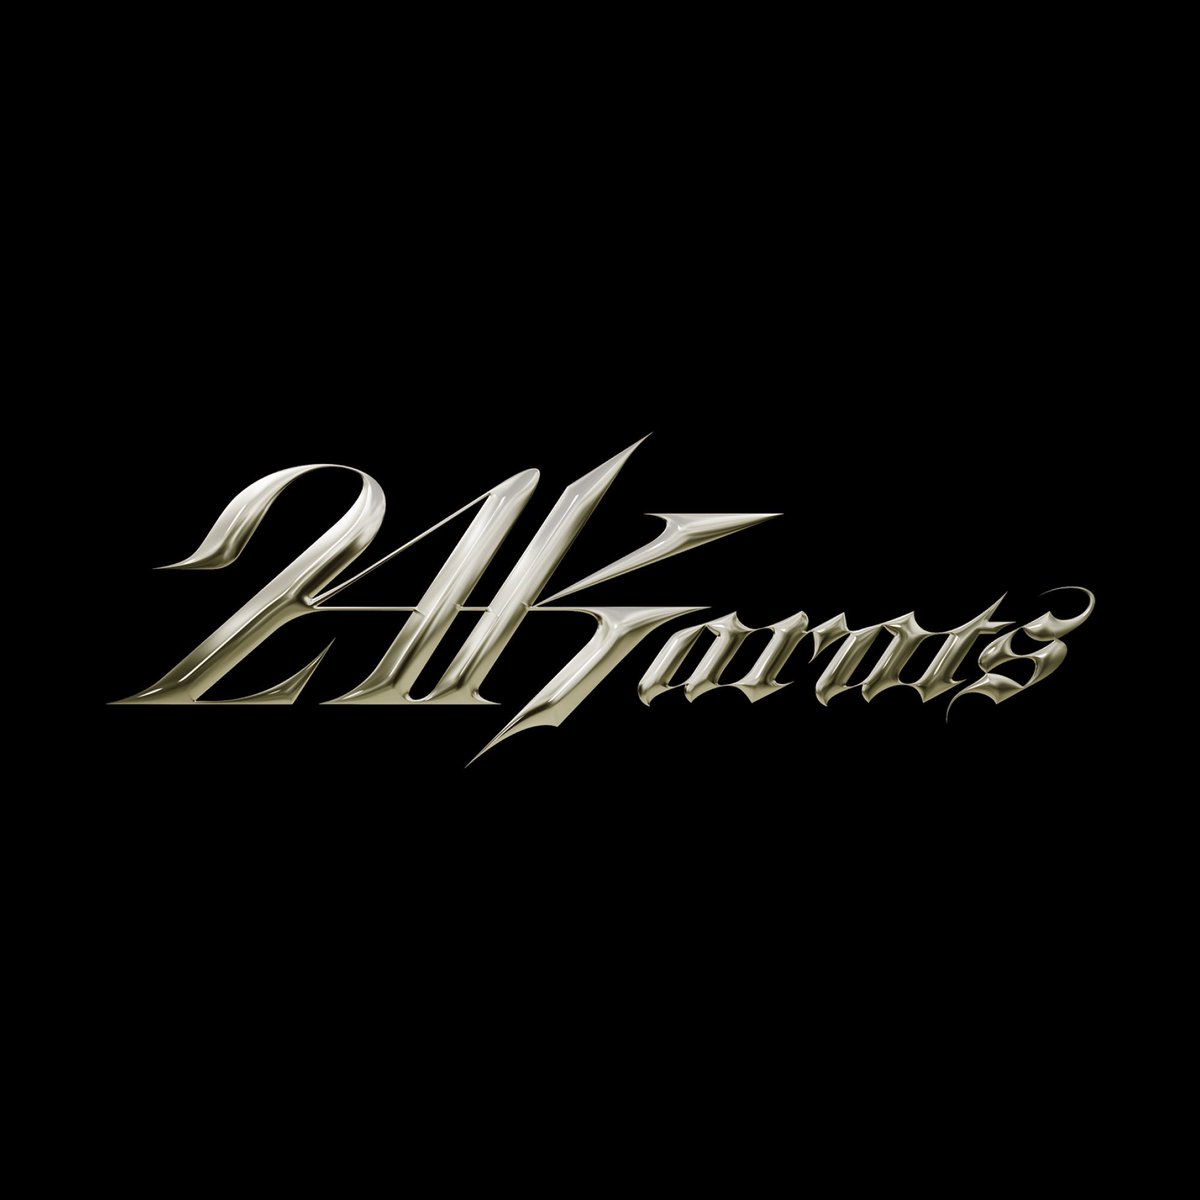 24karats New Logo design by Guccimaze
#24karats